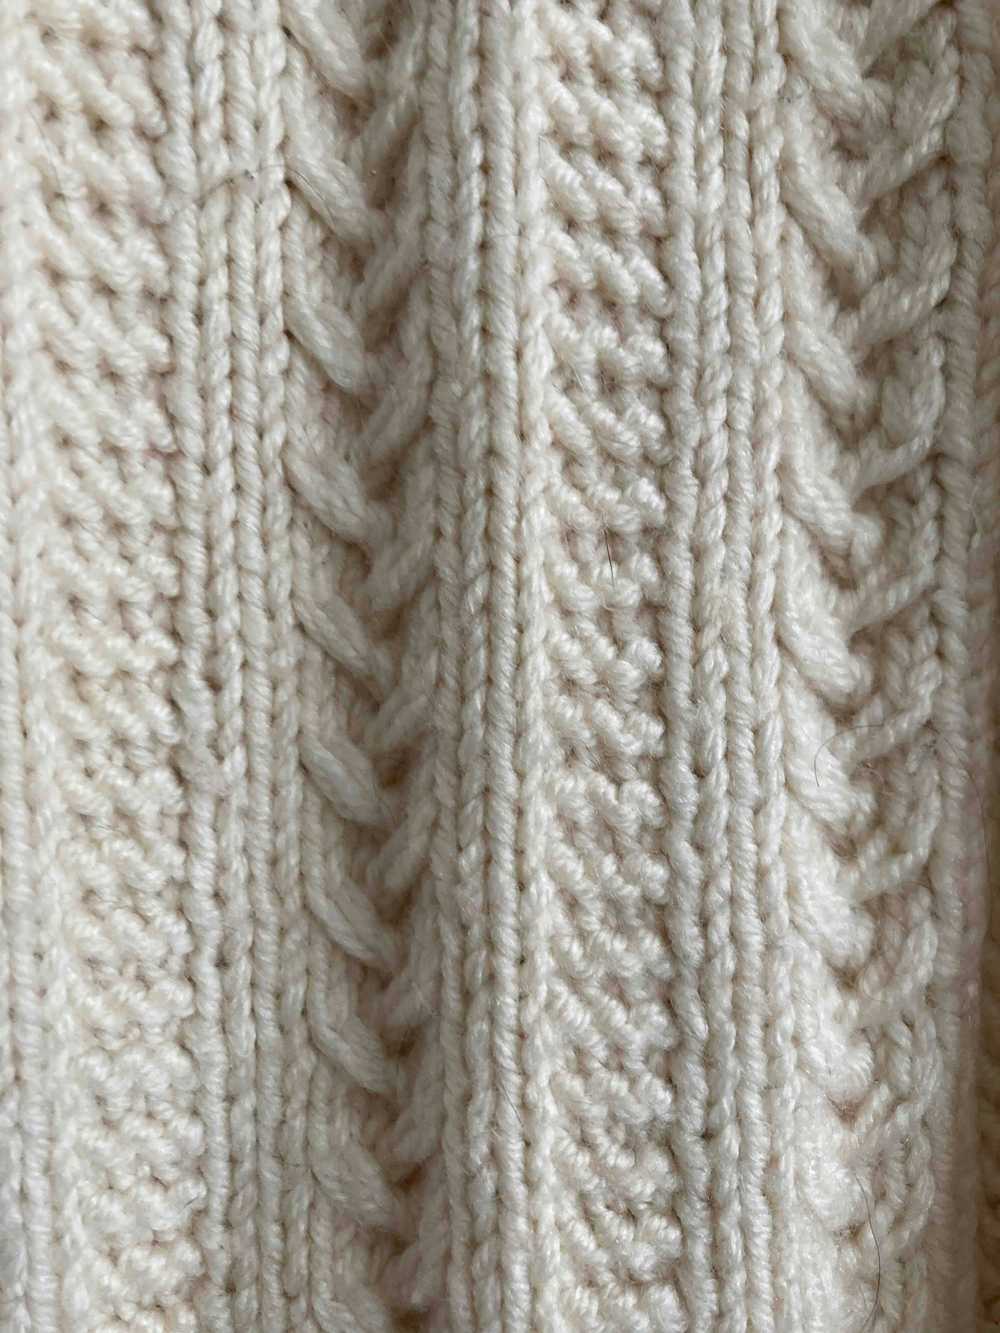 Wool jacket - Hand knitted wool jacket in Irish s… - image 3